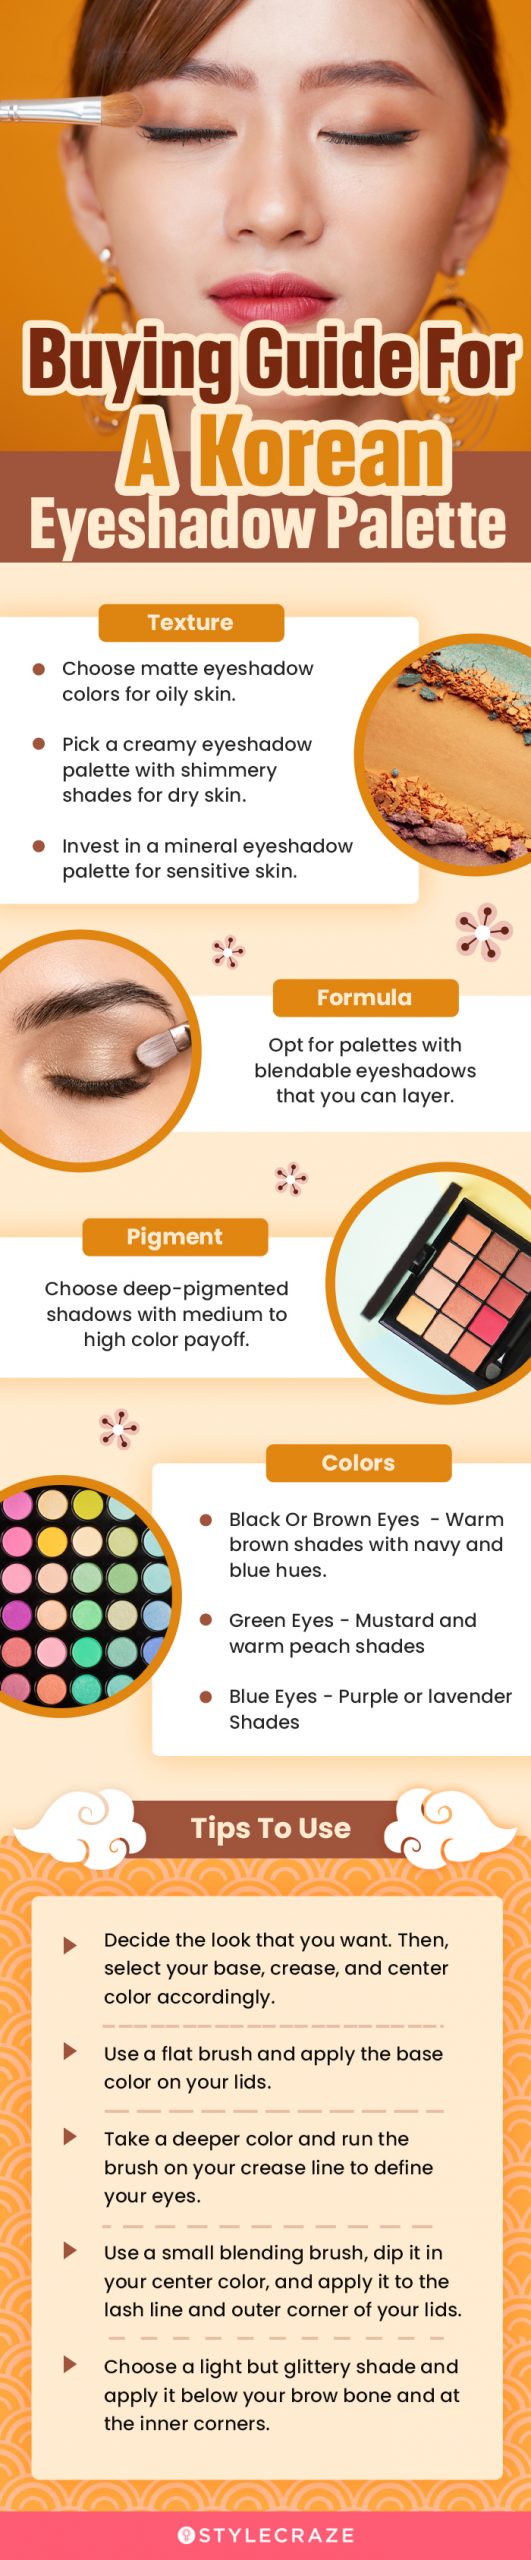 Buying Guide For Korean Eyeshadow Palette